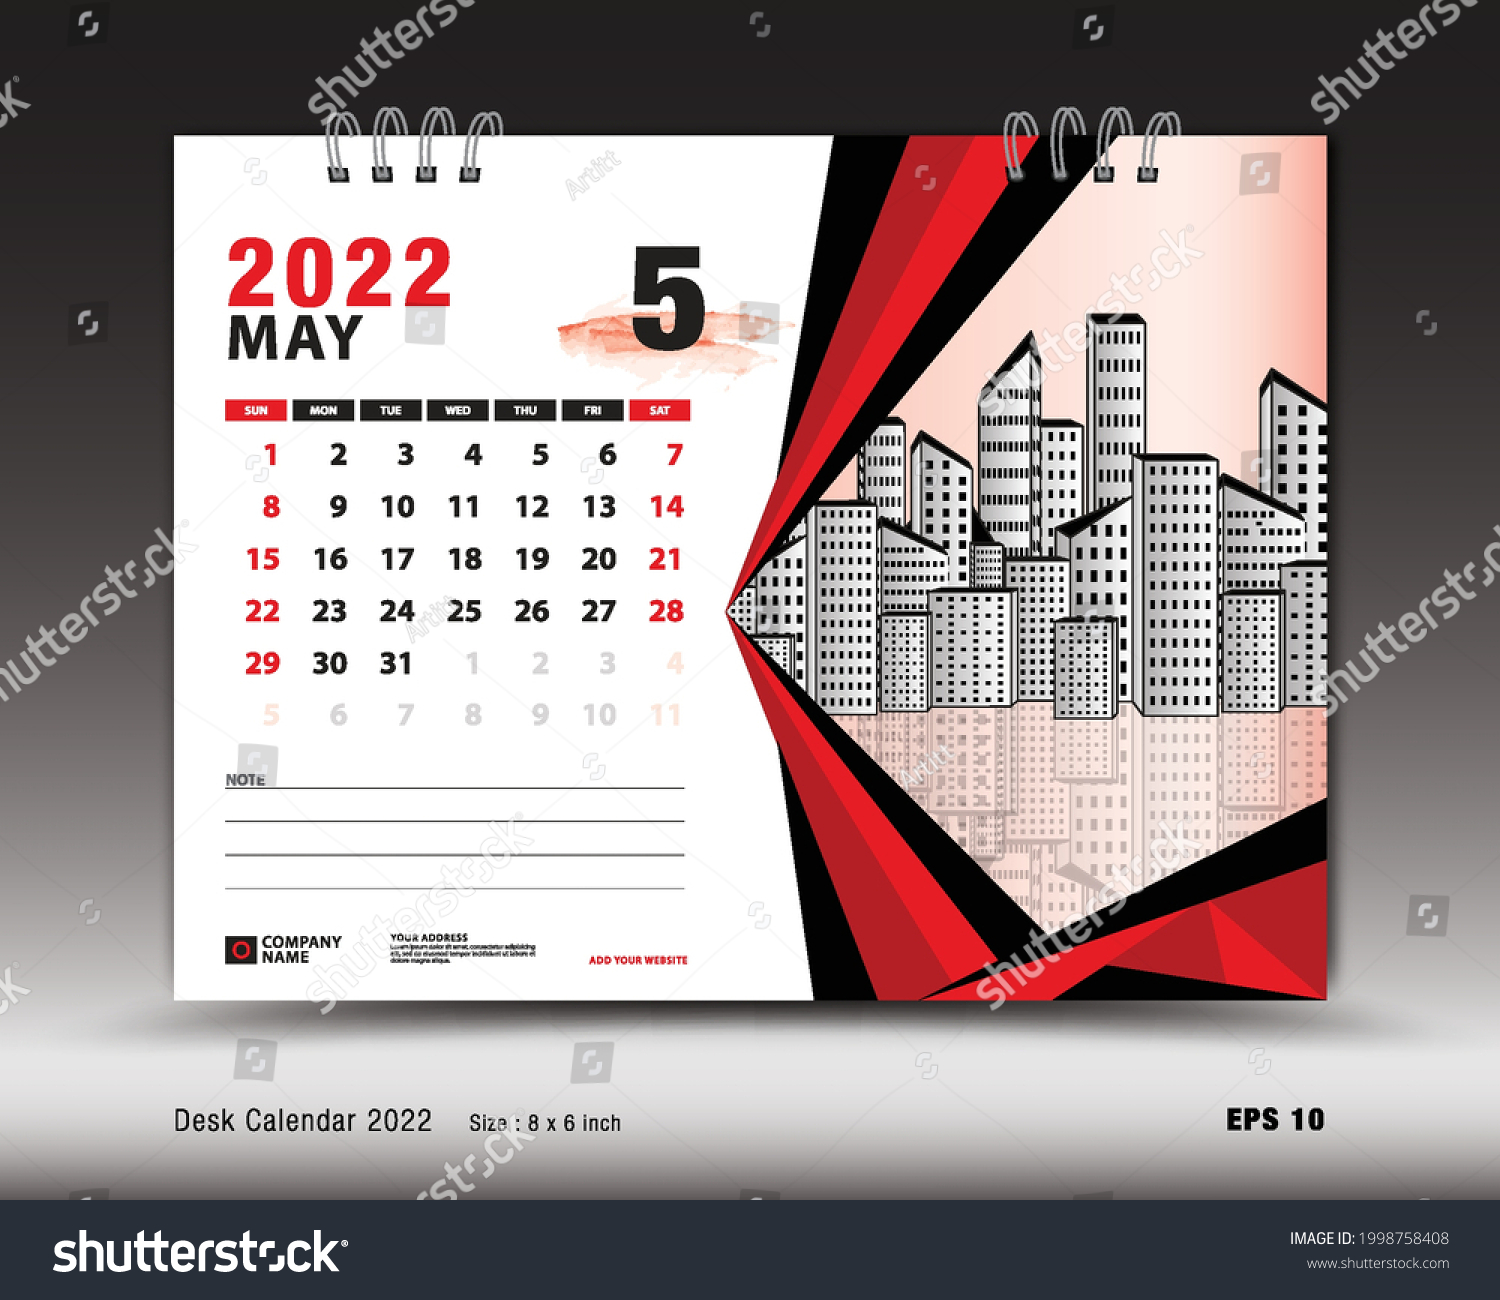 May 2022 Desktop Calendar May 2022 Year Desk Calendar 2022 Stock Vector (Royalty Free) 1998758408